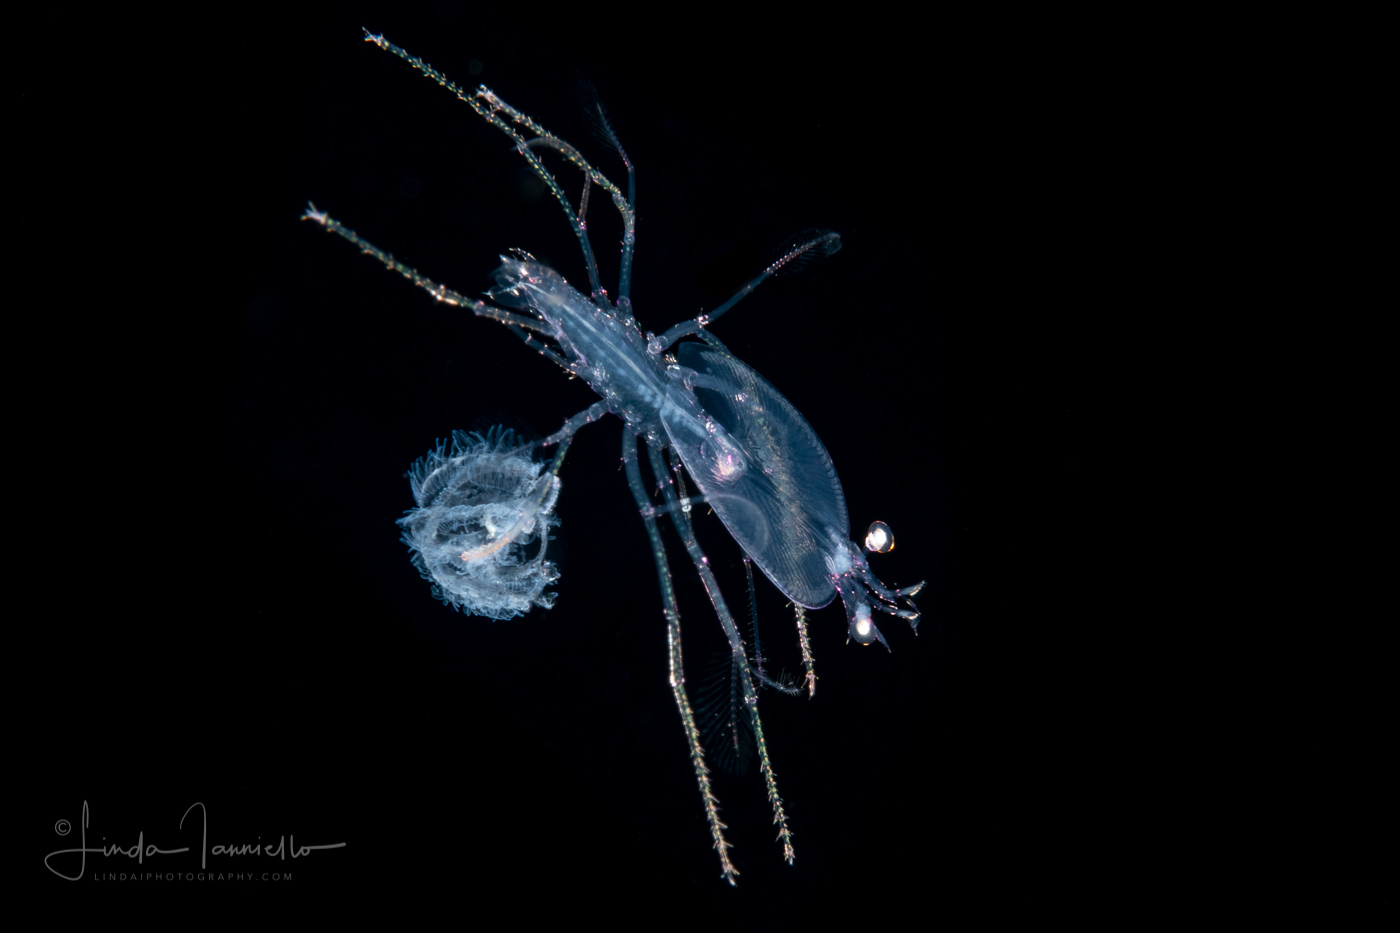 Slipper Lobster - Phyllosoma Larva - Scyllaridae - With an Acorn Worm - Tornaria larva of a hemichordate worm